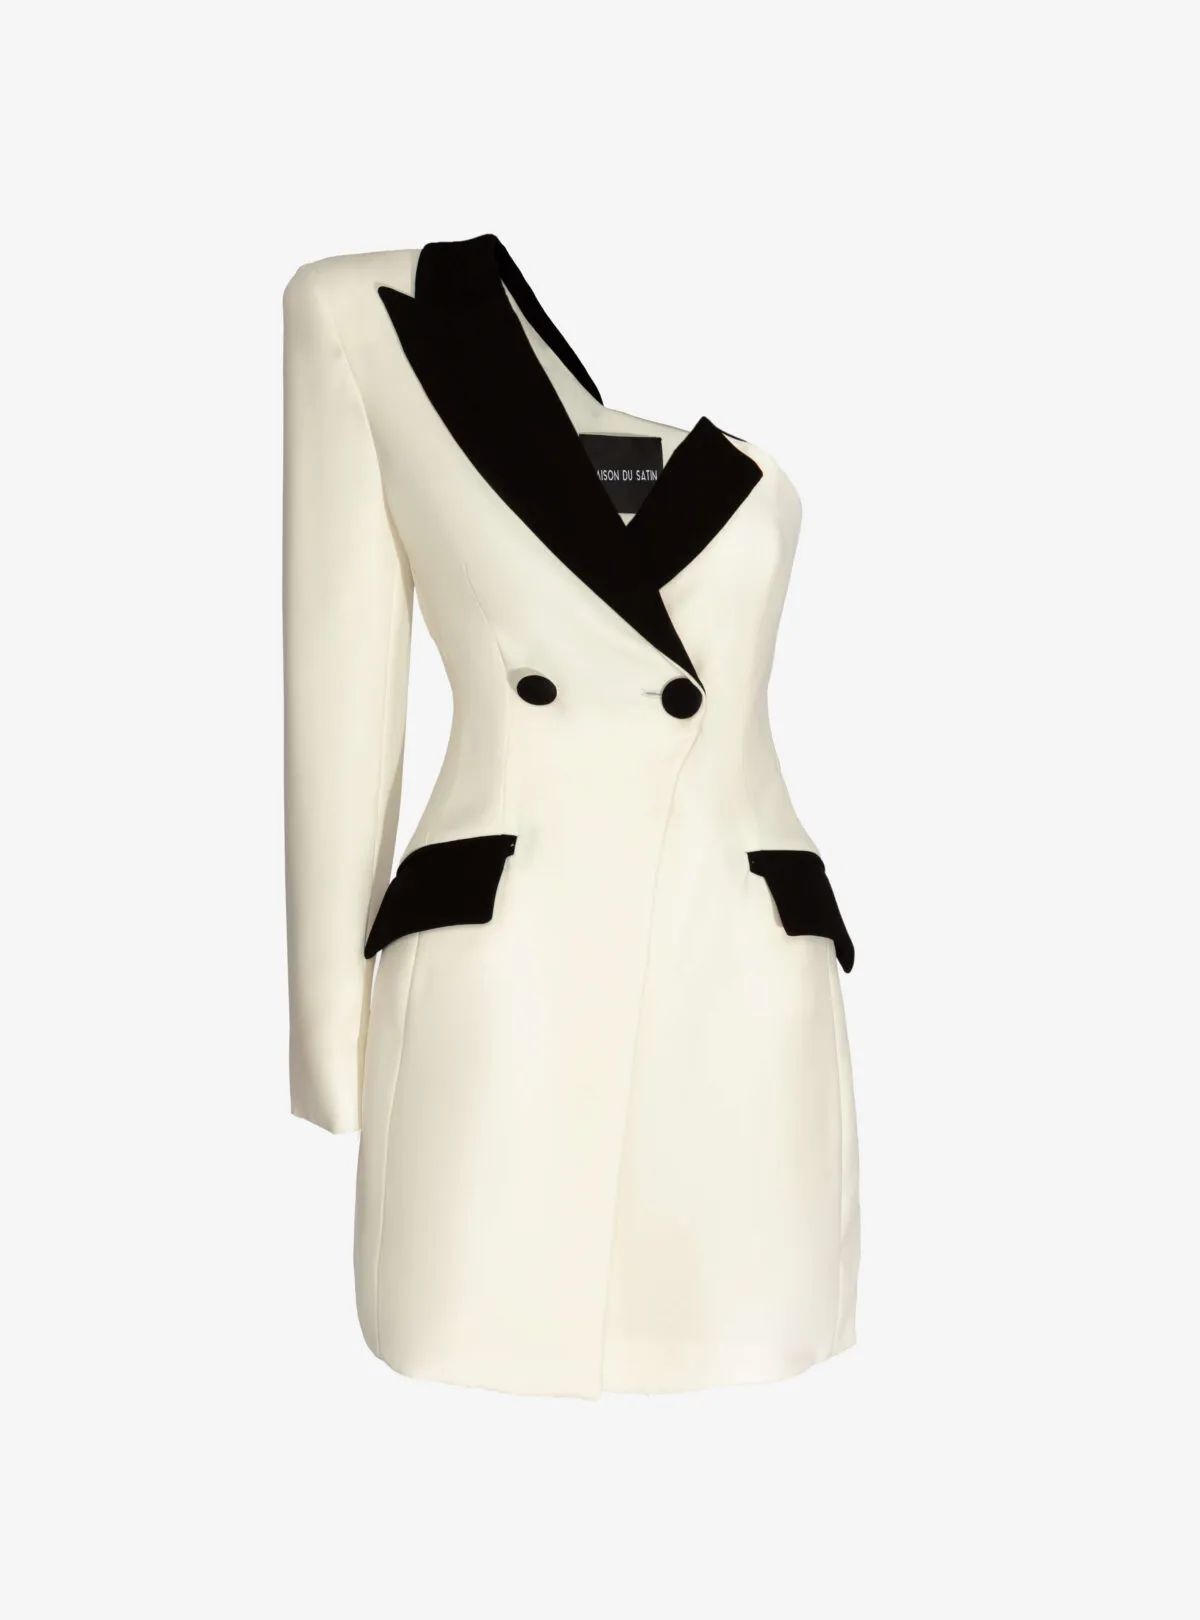 asymmetric black and white dress jacket